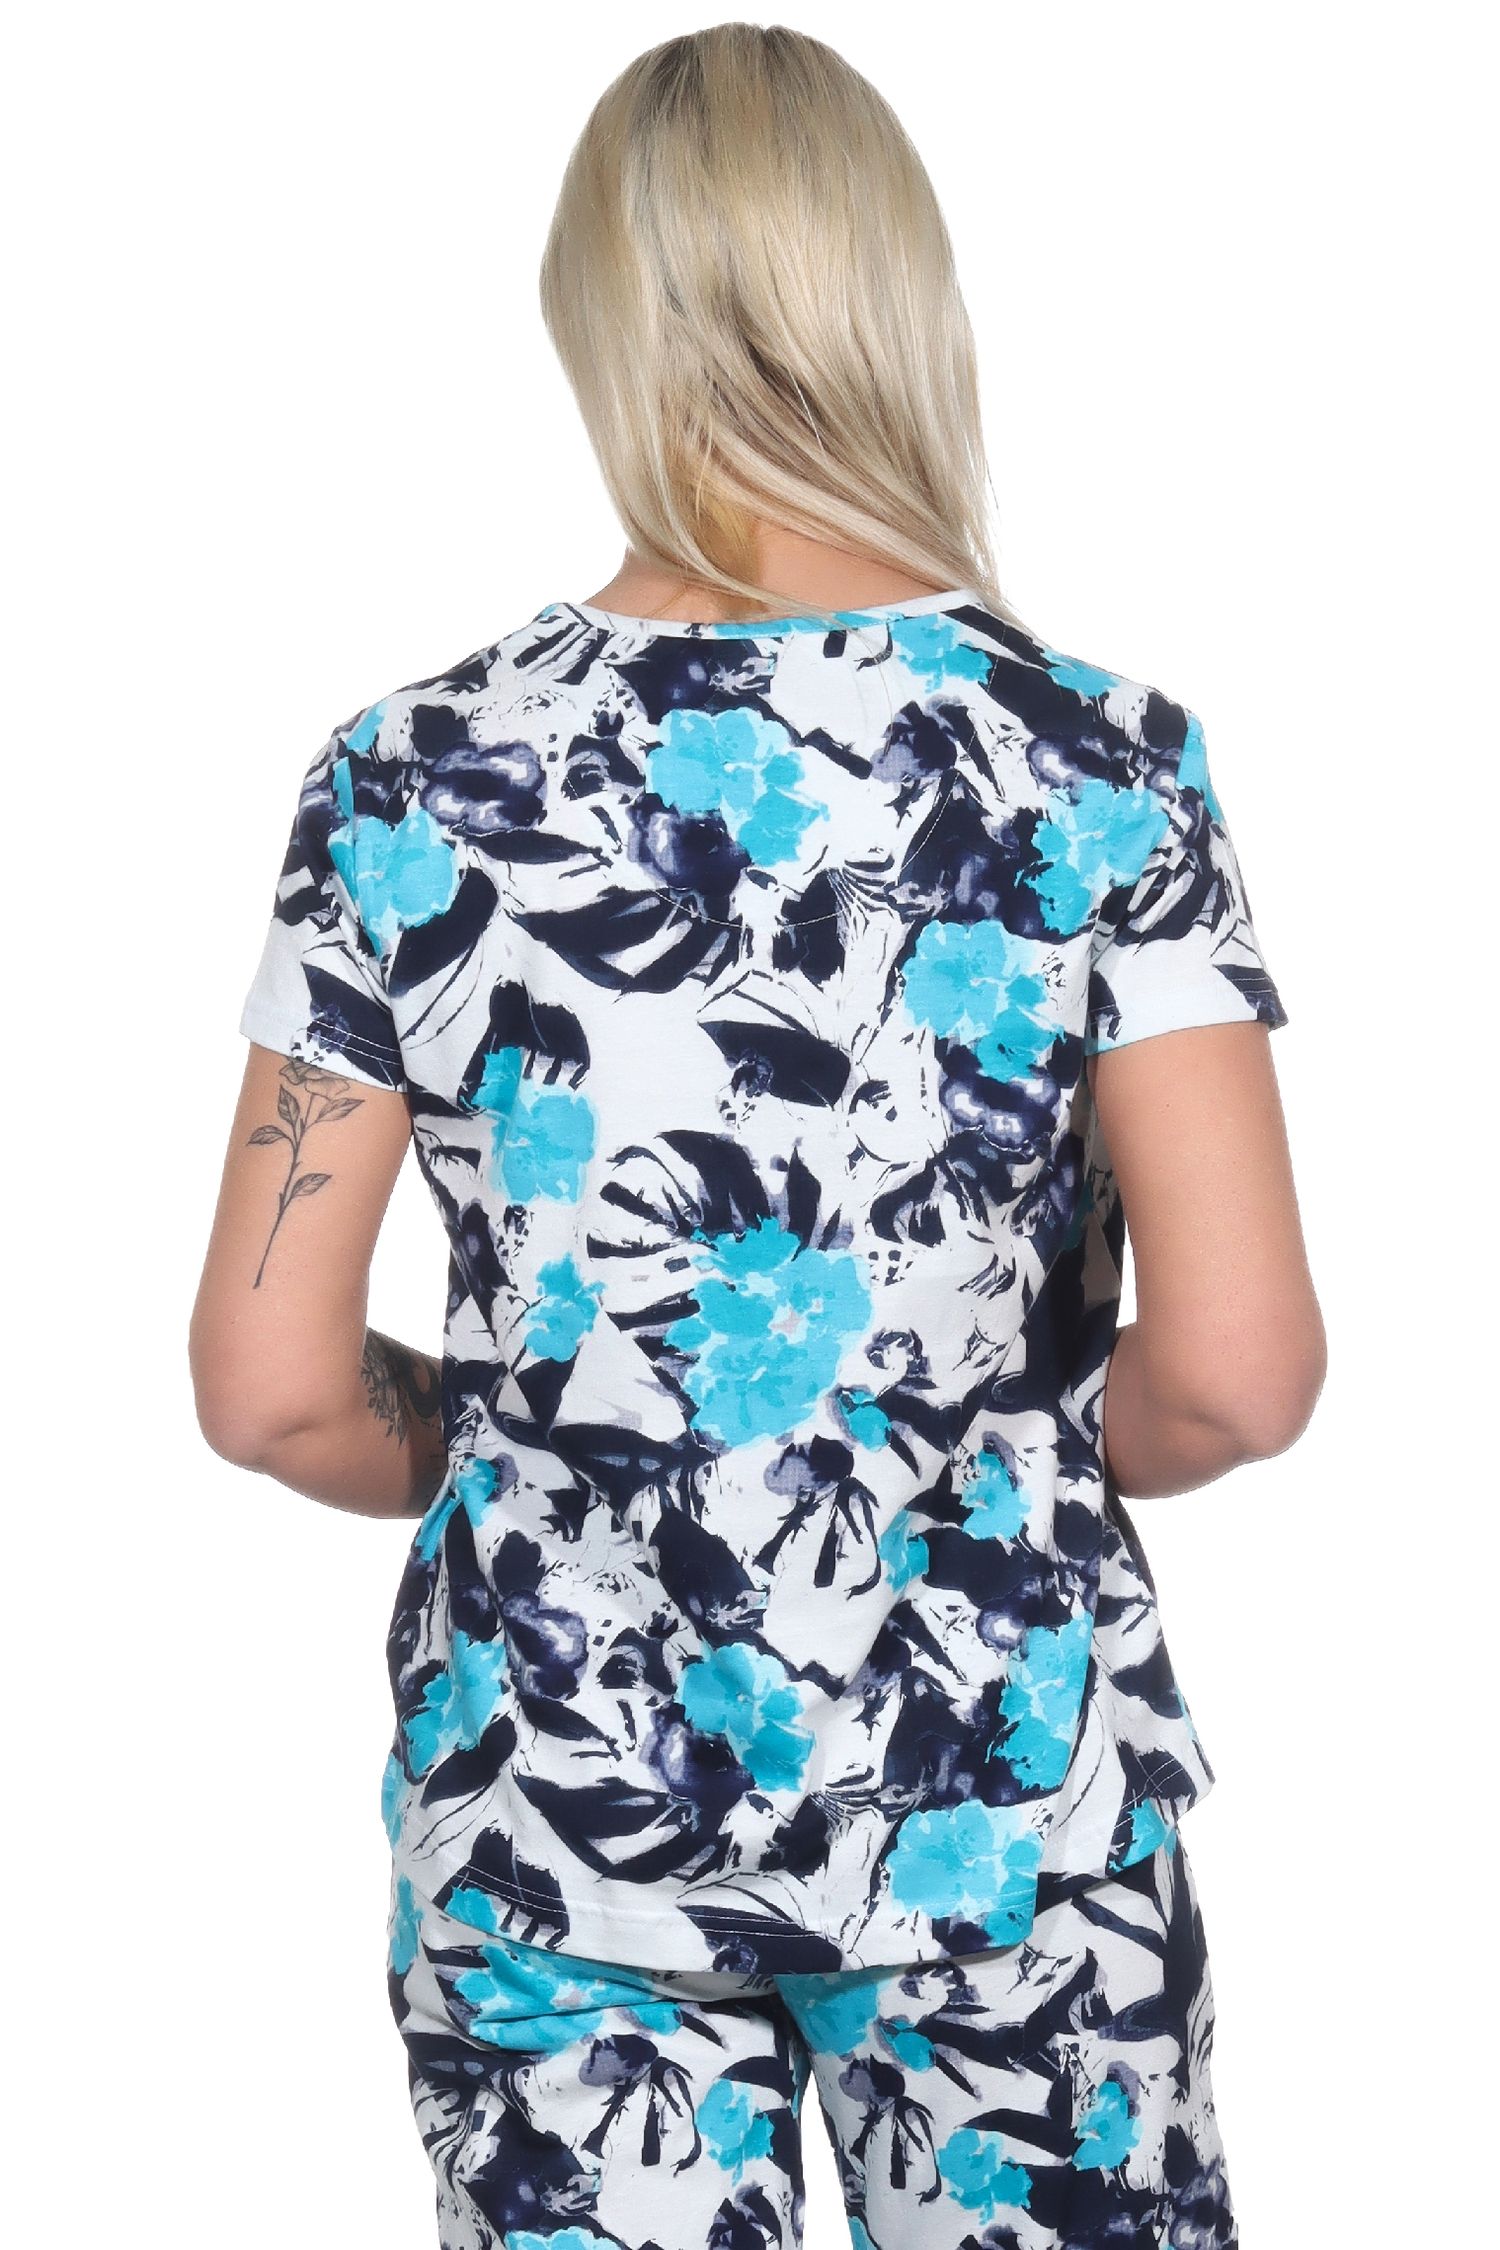 Damen Schlafanzug Shirt kurzarm Pyjama Oberteil Mix & Match in floraler Optik